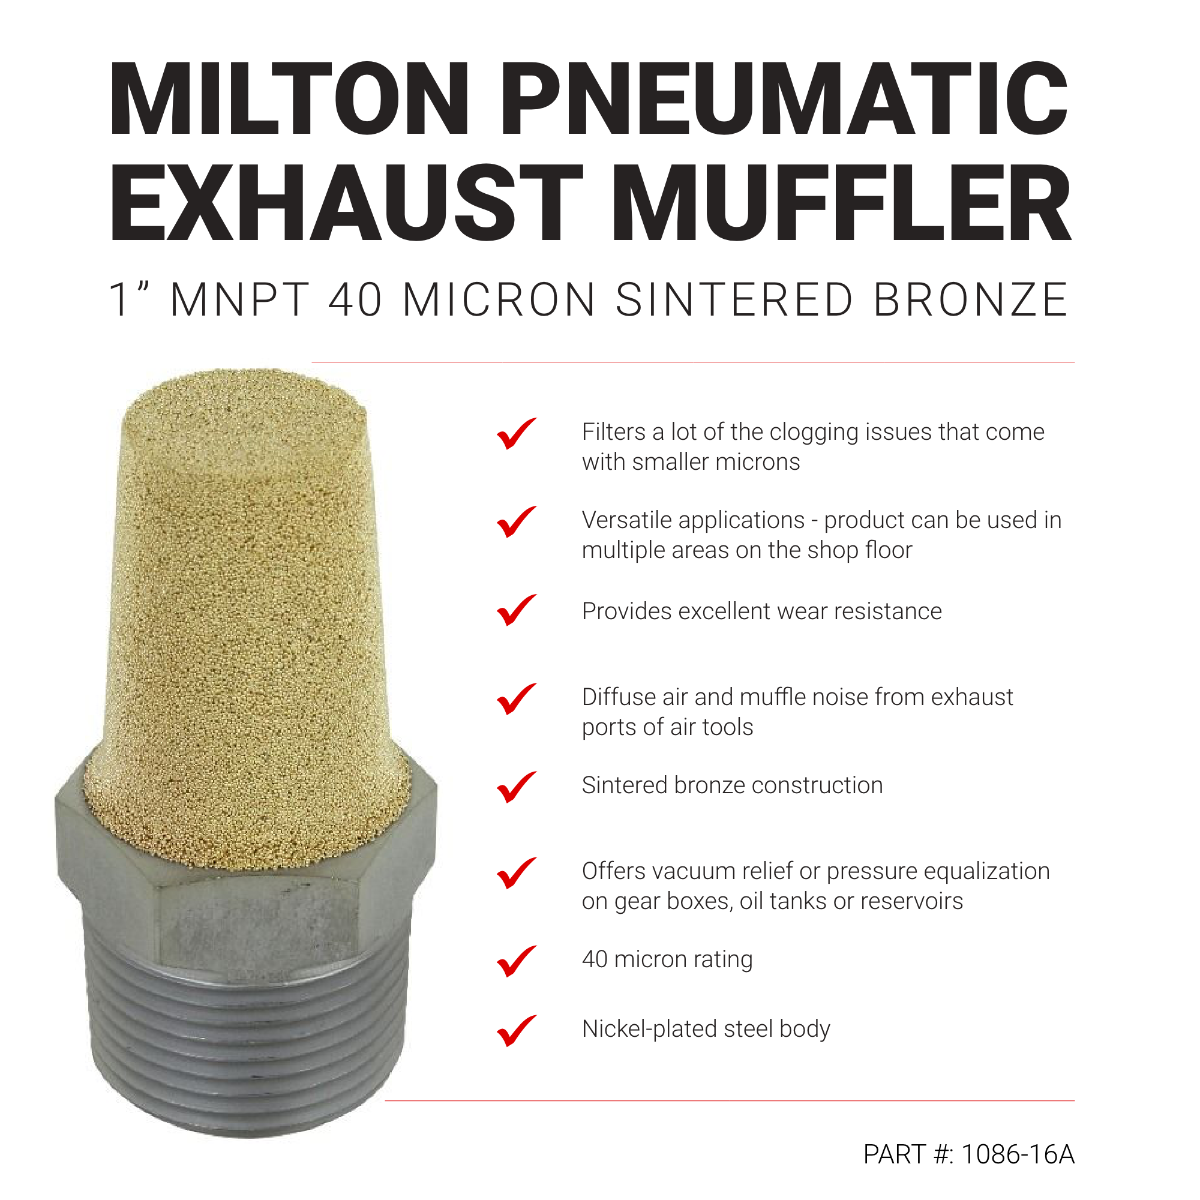 Pneumatic Exhaust Muffler, 1” MNPT 40 Micron Sintered Bronze Silencer/Diffuse air & Noise Reducer - Box of 25